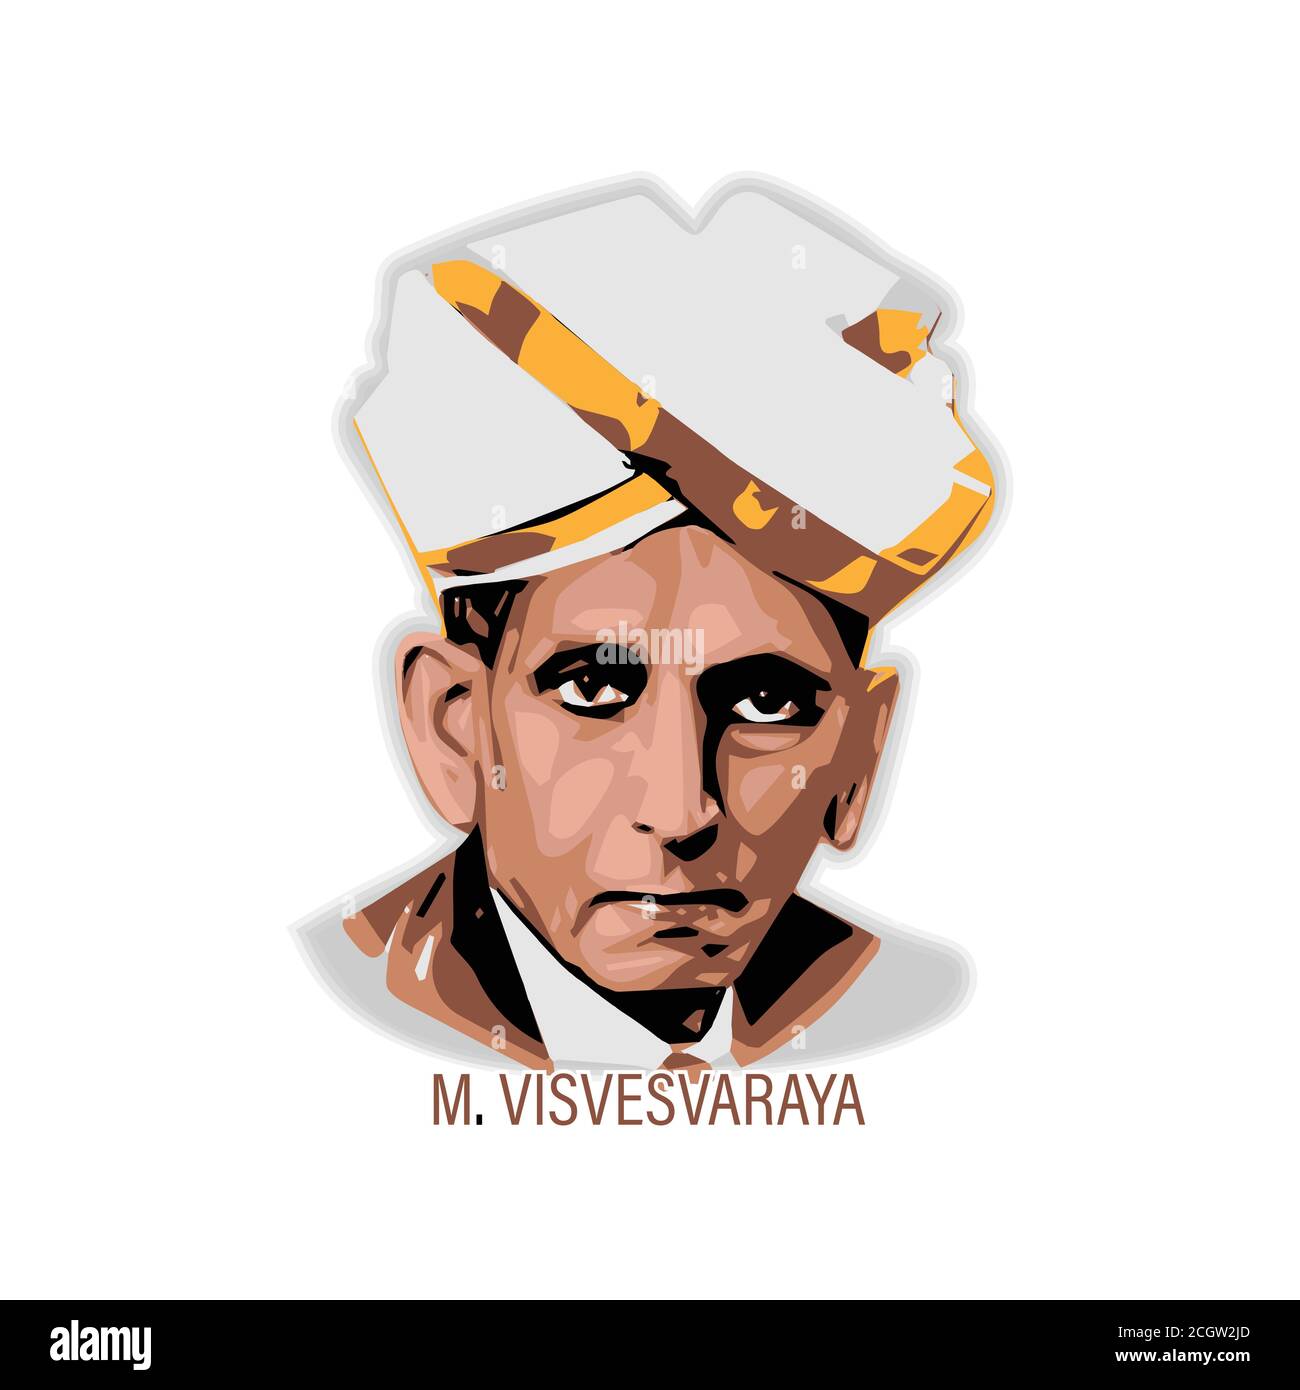 Mokshagundam visvesvaraya Banque d'images détourées - Alamy